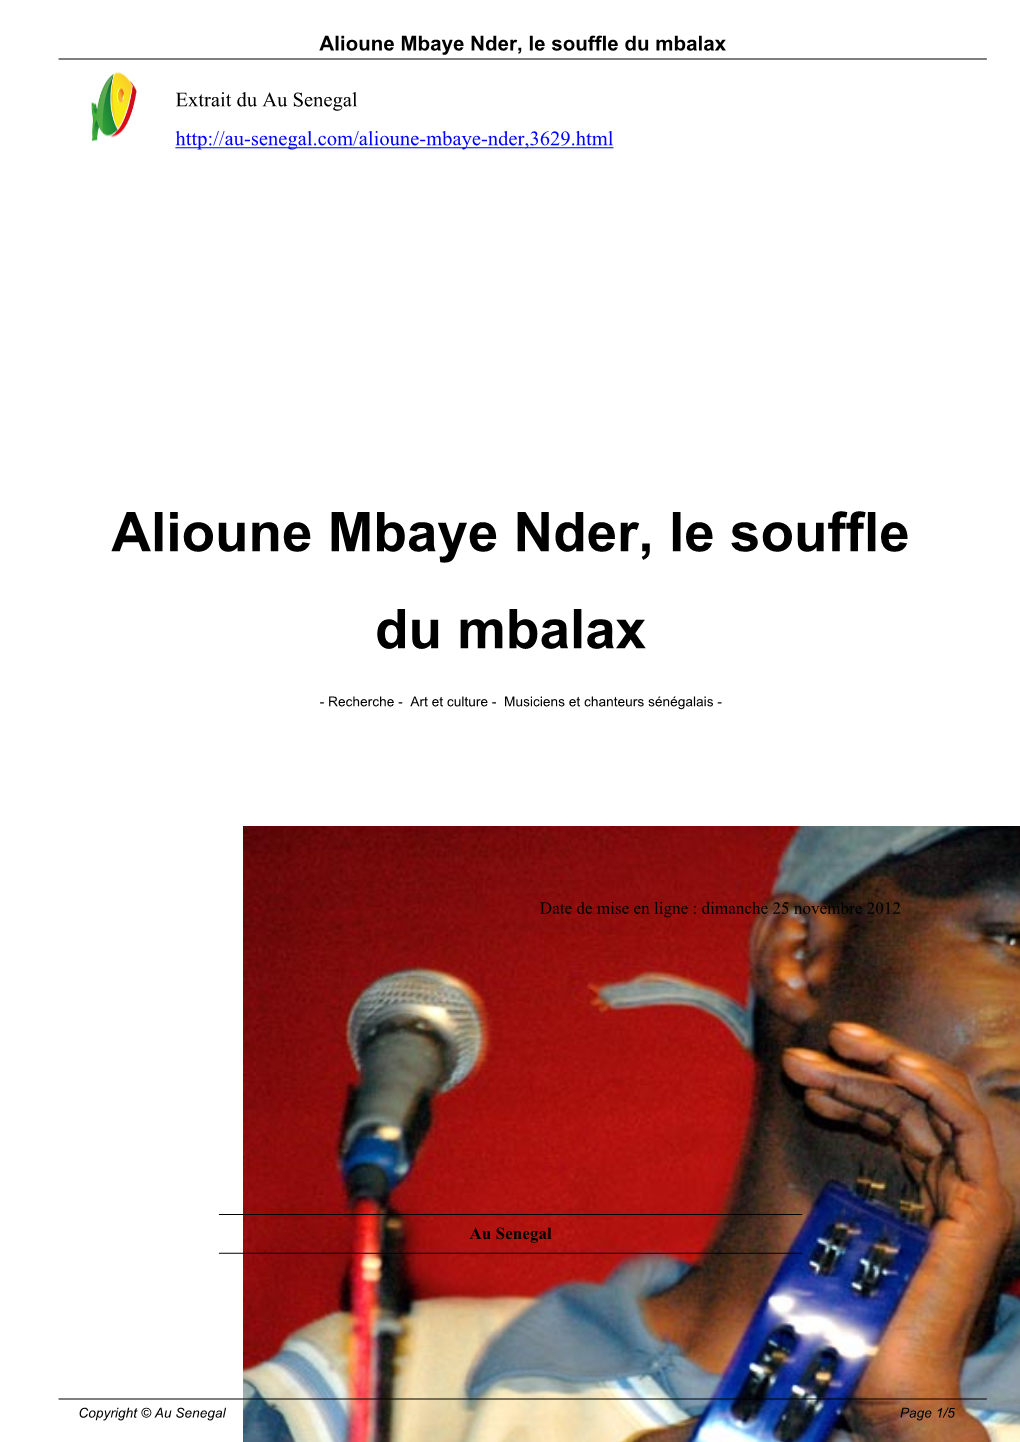 Alioune Mbaye Nder, Le Souffle Du Mbalax